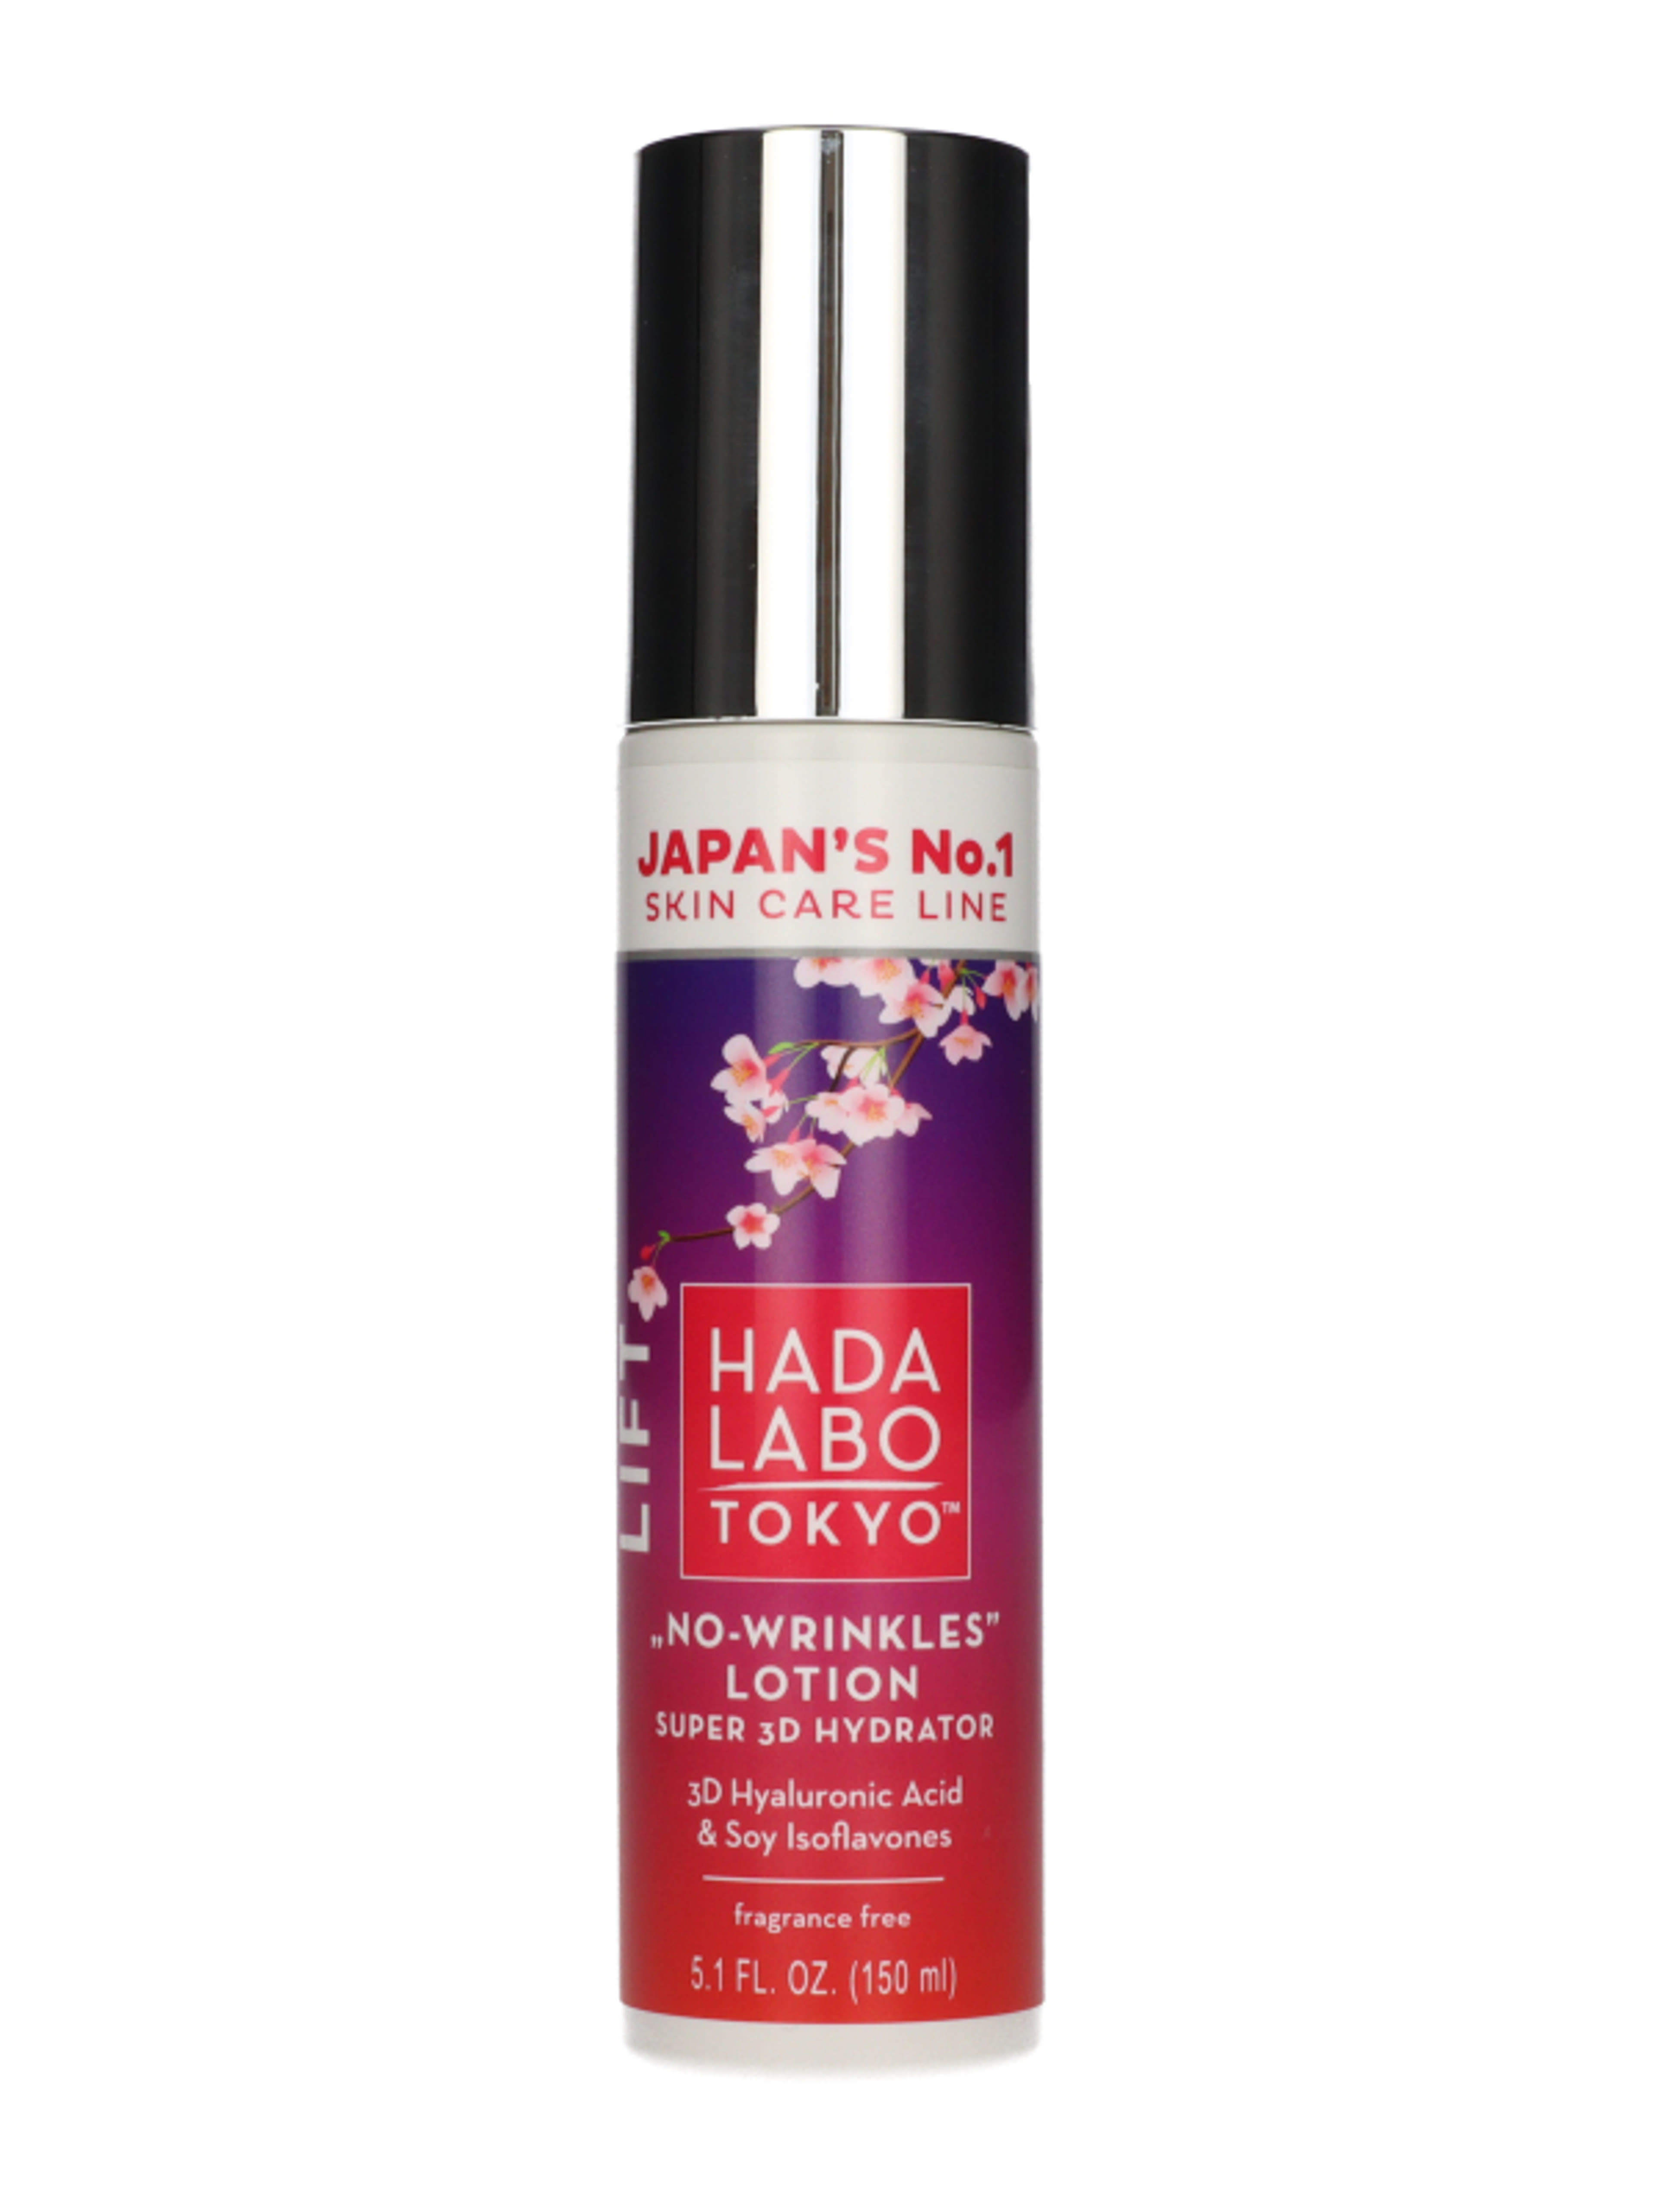 Hada Labo Tokyo Lift No-Wrinkles Lotion - 150 ml-2